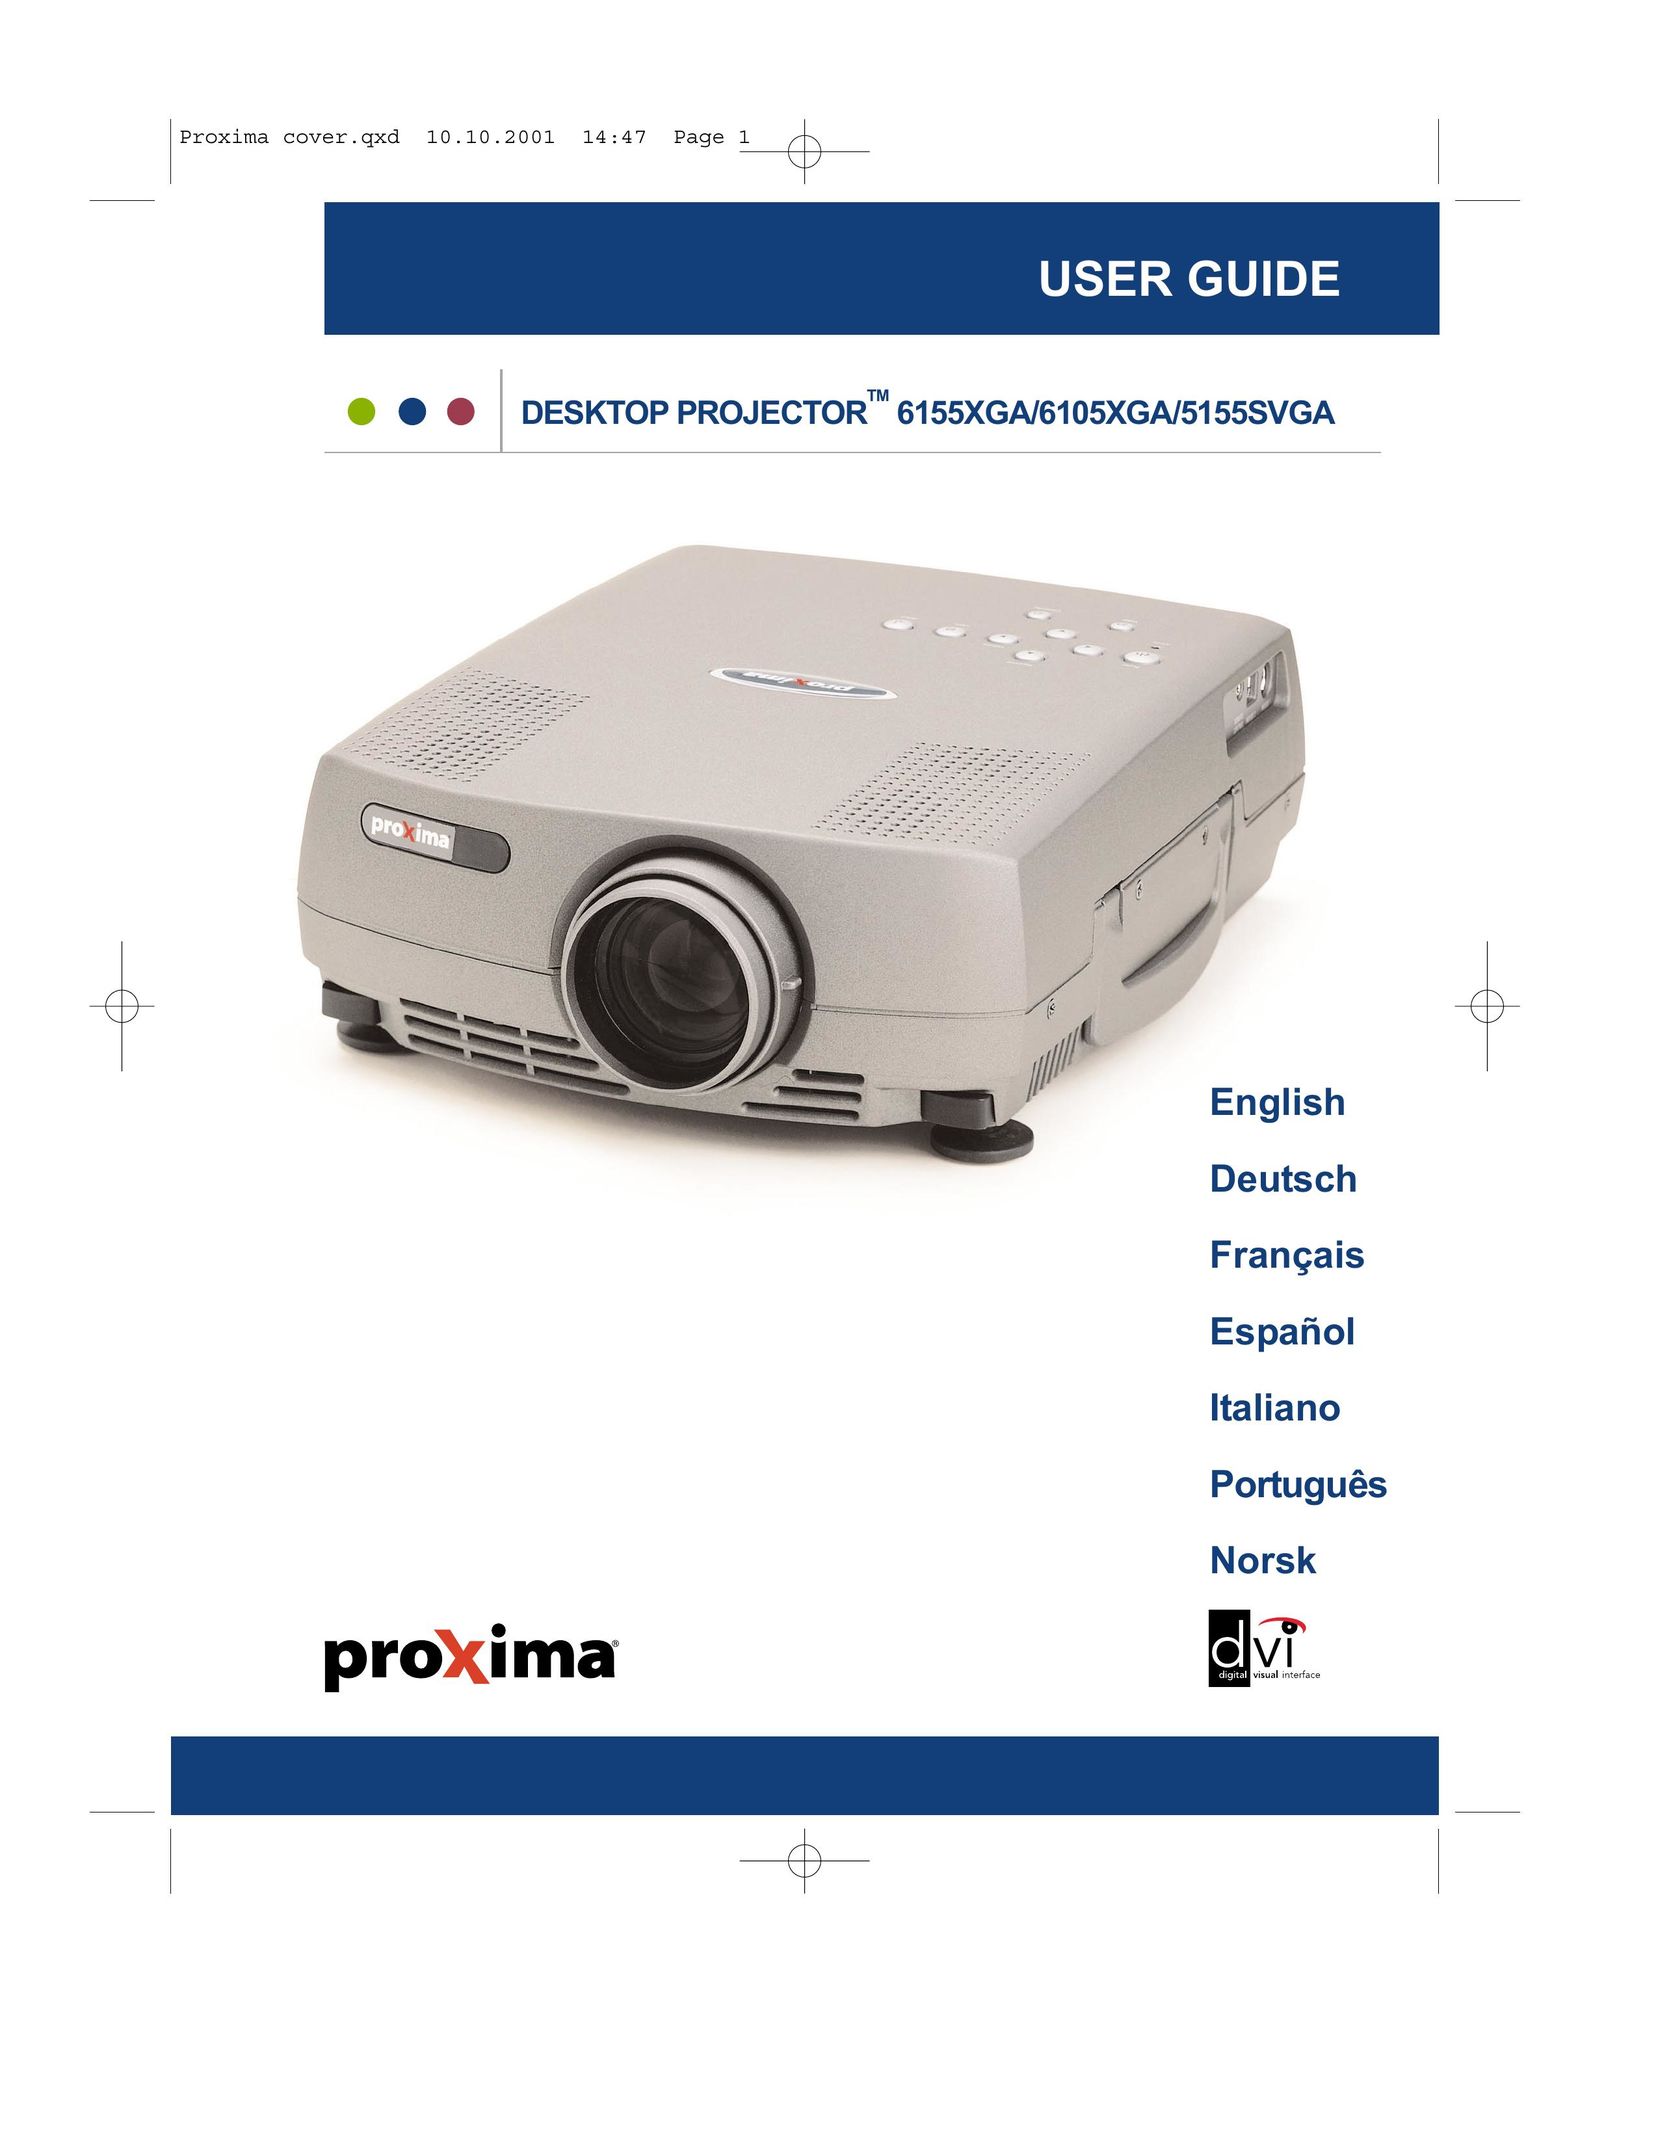 Proxima ASA 5155SVGA Projector User Manual